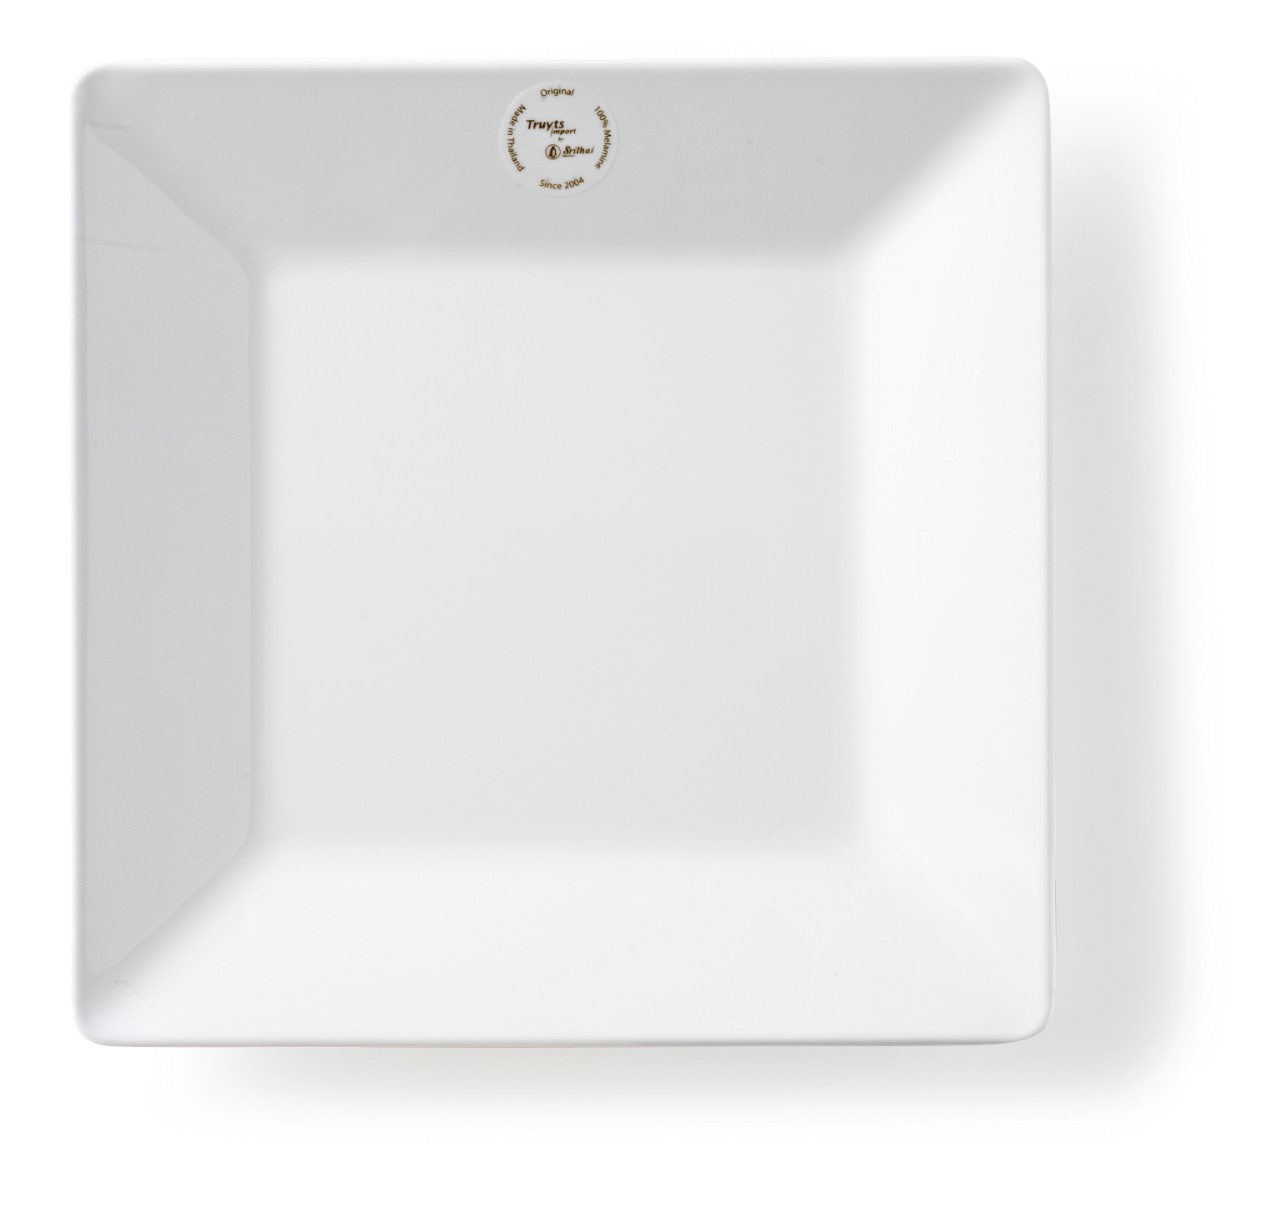 Bord vierkant 21 x 21 cm melamine, wit